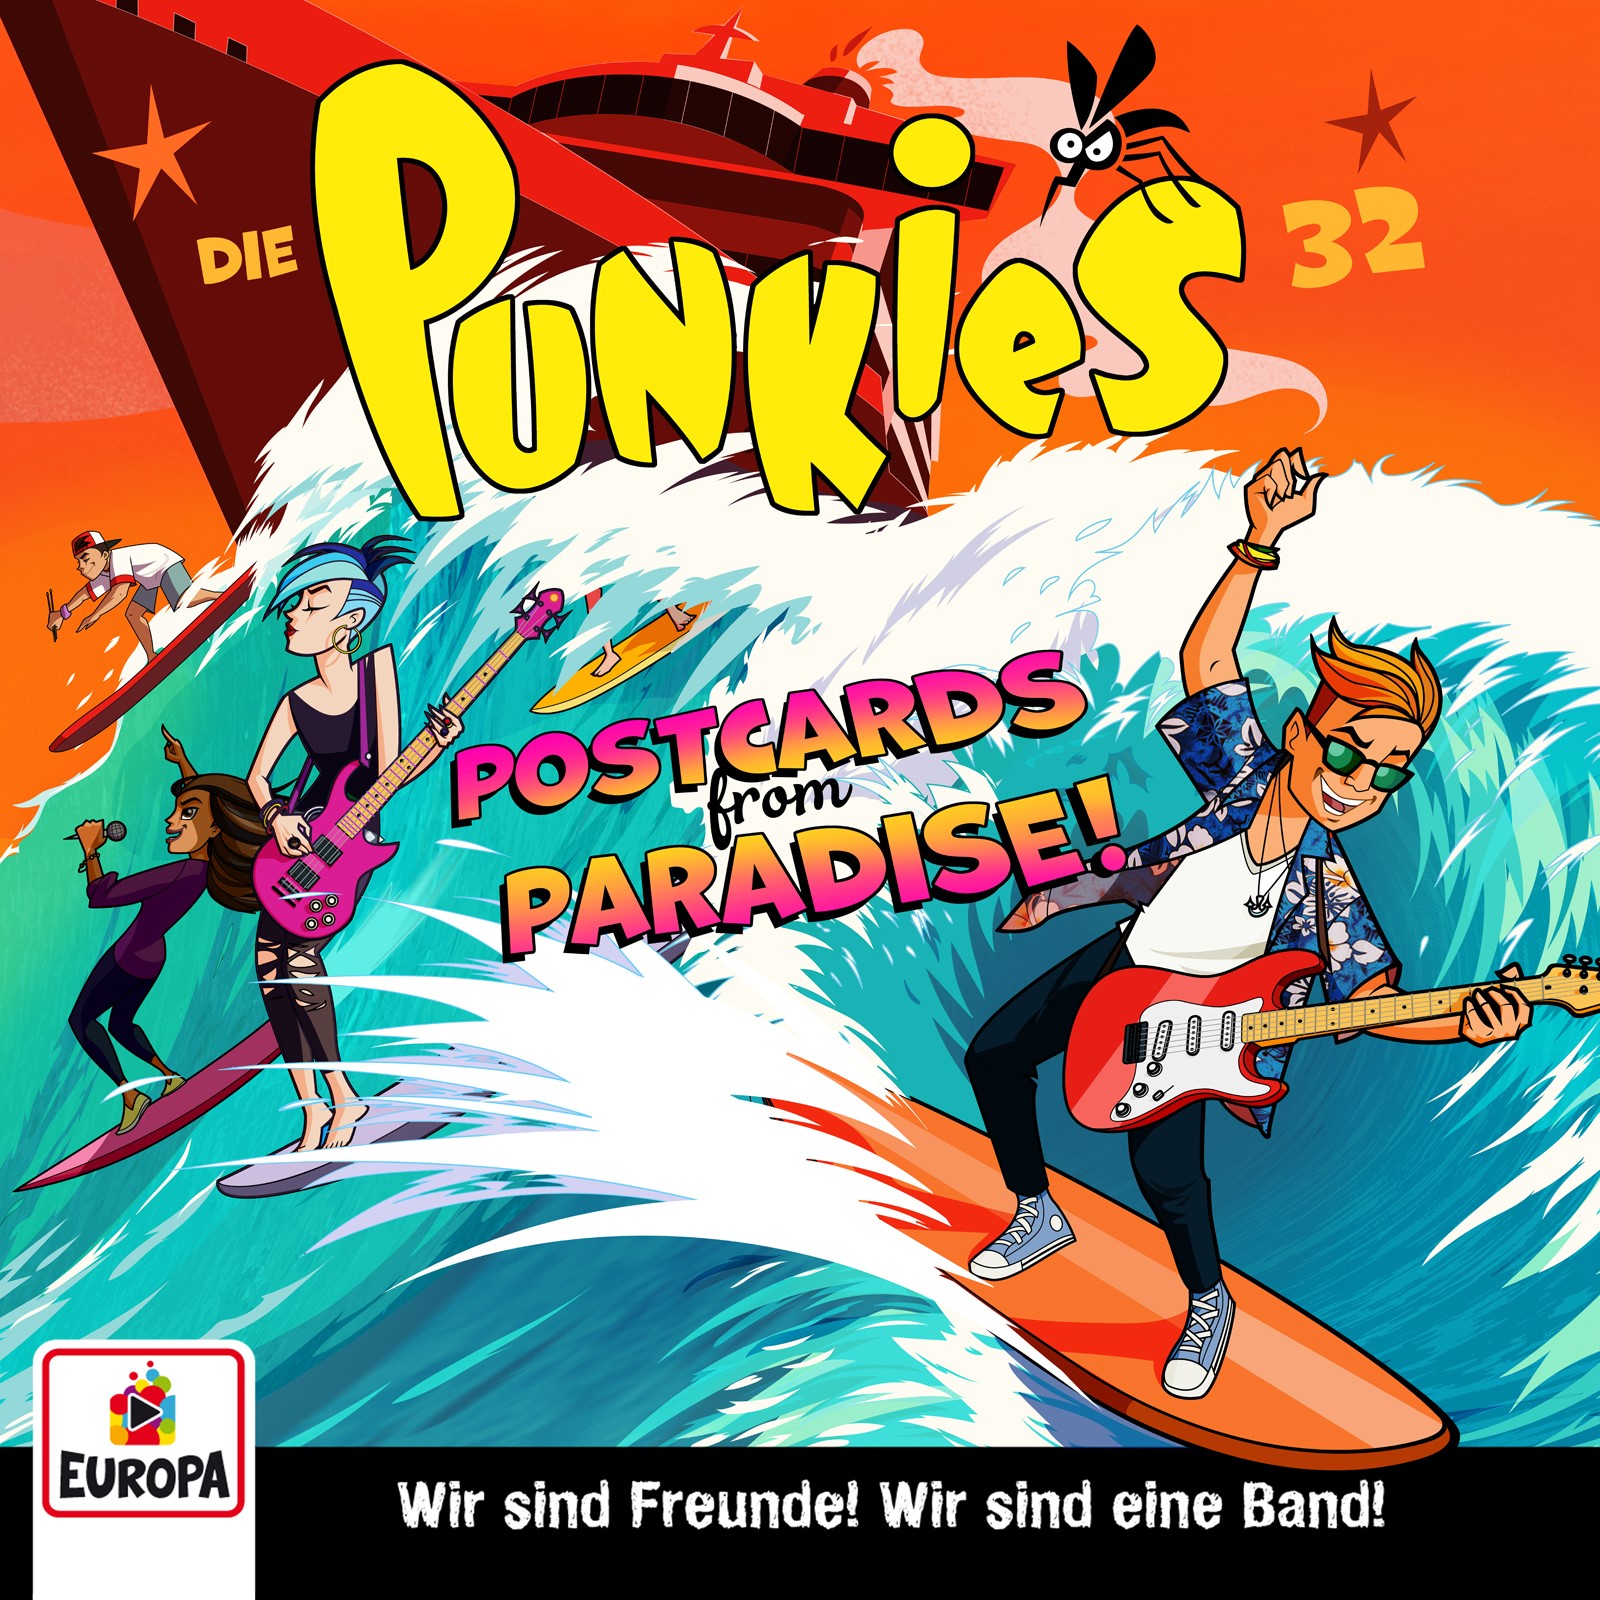 Die Punkies  - Postcards from Paradise!